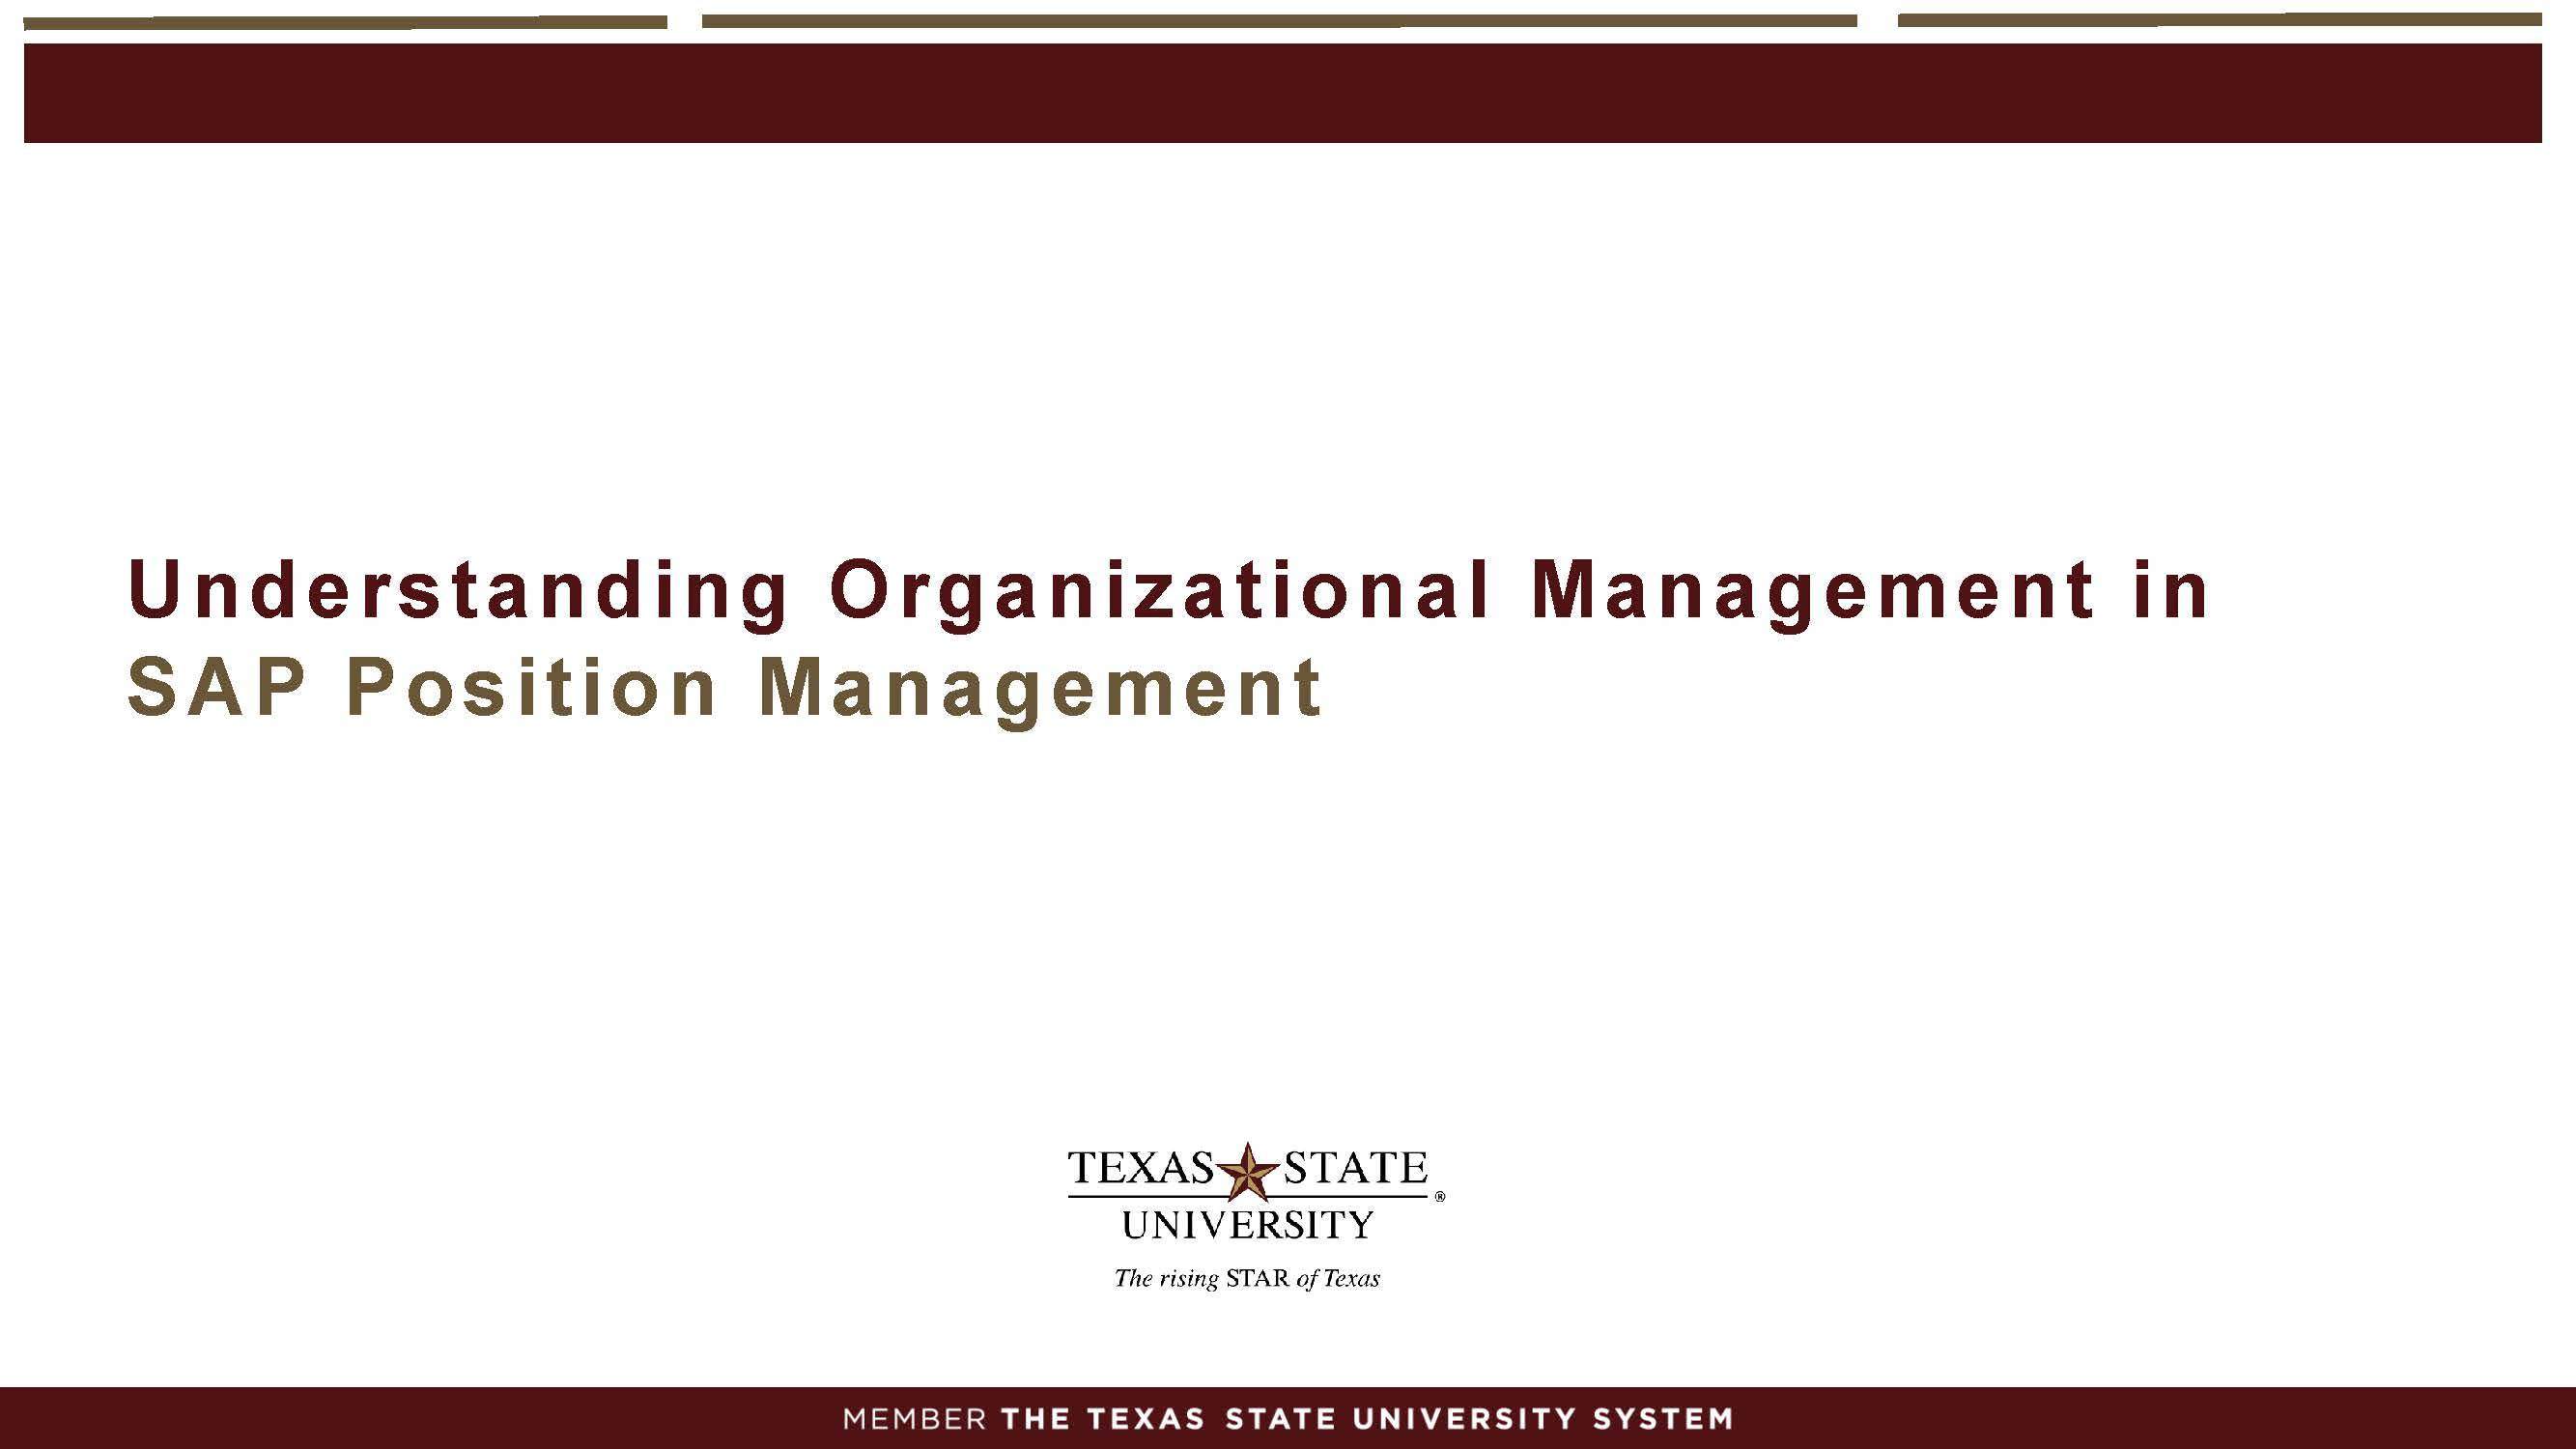 understanding organizational management in SAP position management power point